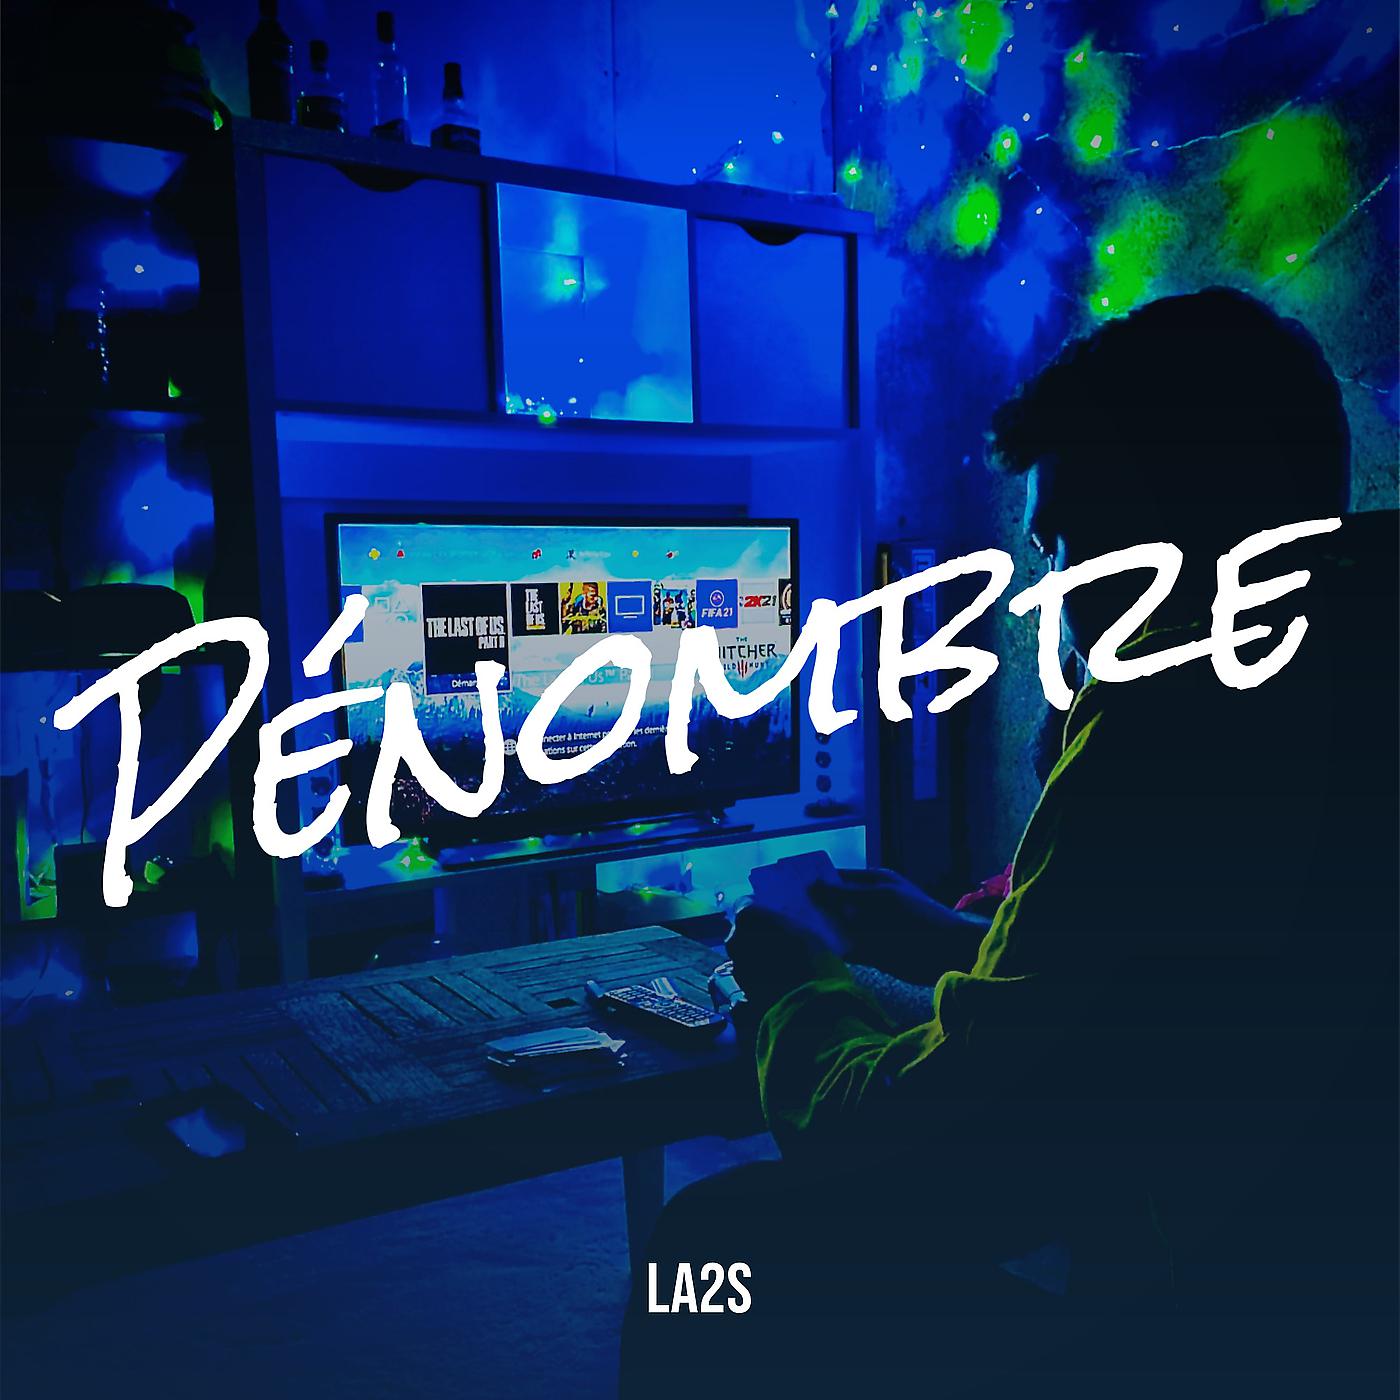 Постер альбома Pénombre